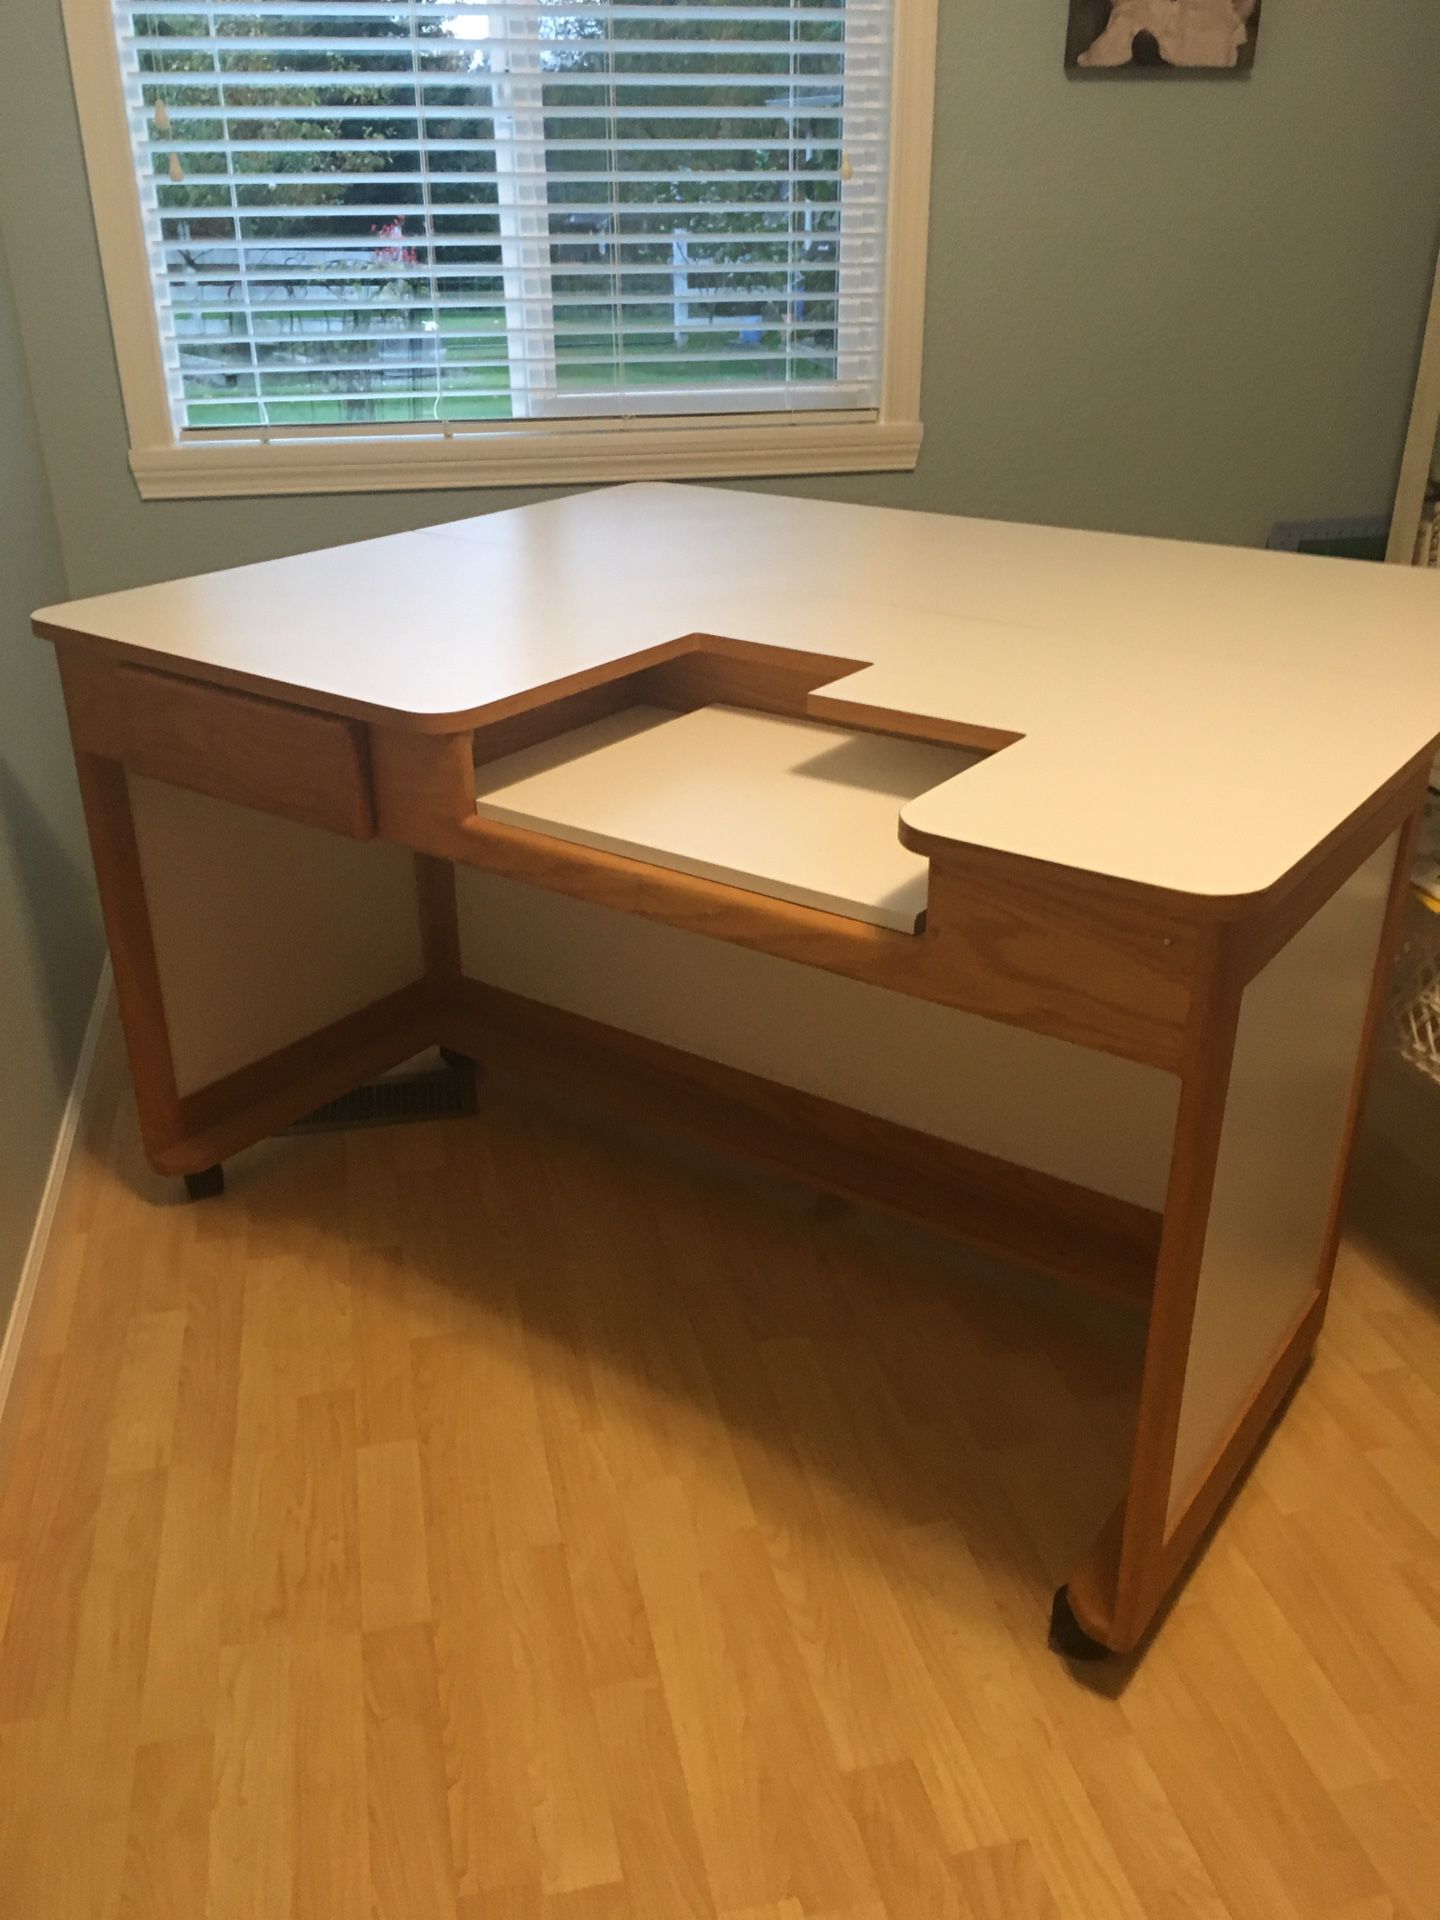 Sewing/crafting Table - PENDING P/U